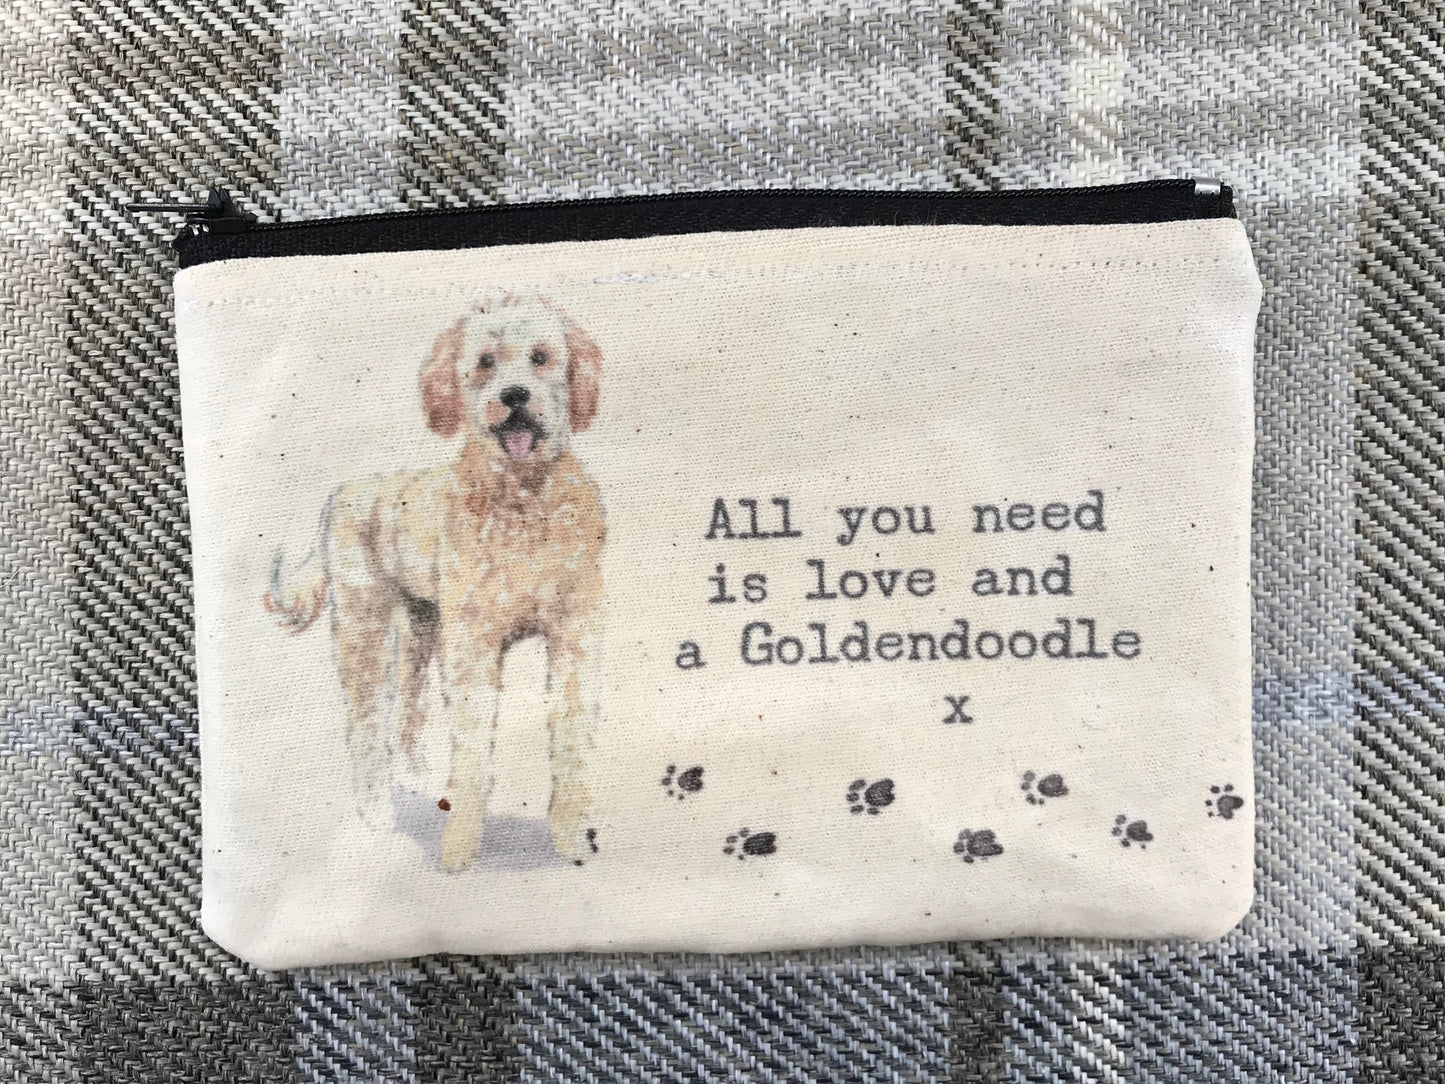 Goldendoodle coin purse